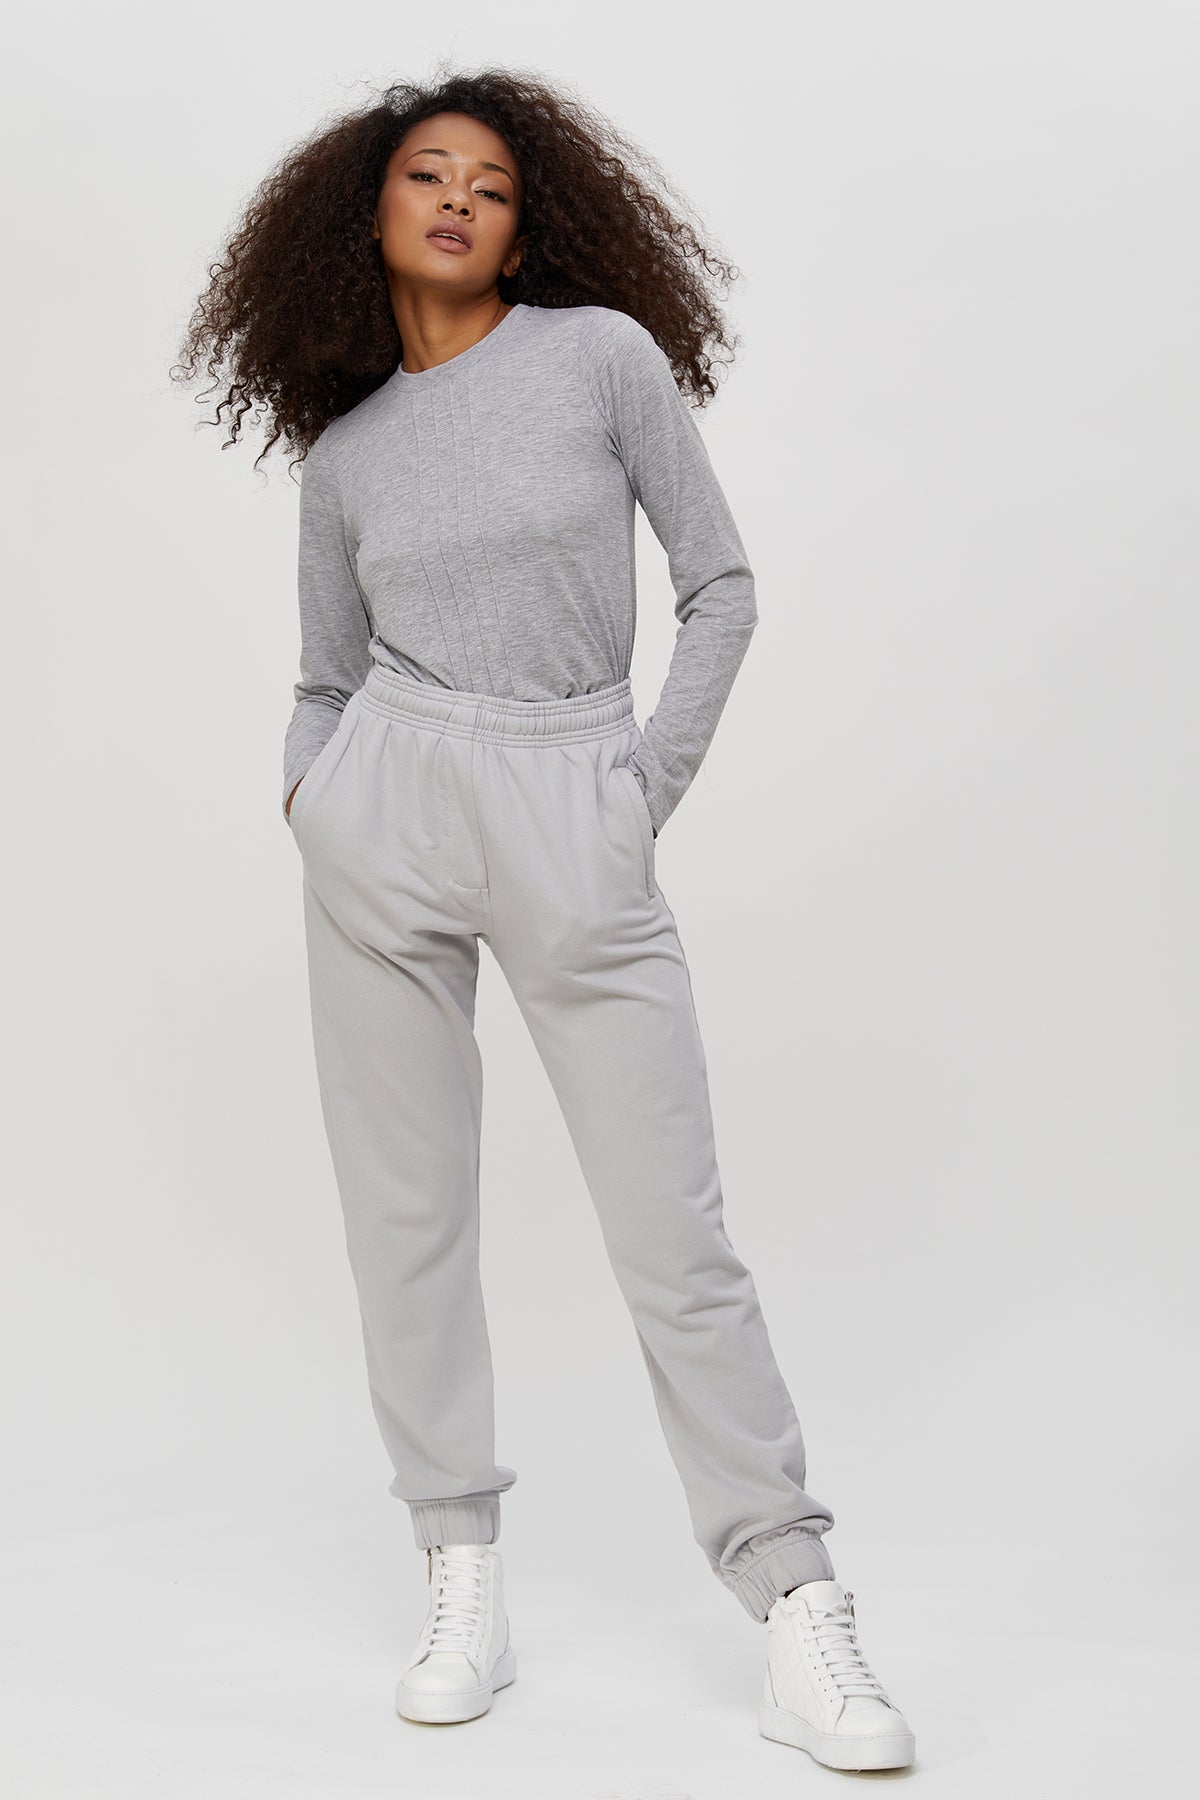 Women's sweatpants - active fleece joggers . 100 % great quality Turkish Pima cotton preshrunk. Zippered pockets. Sports. Gym, Yoga.